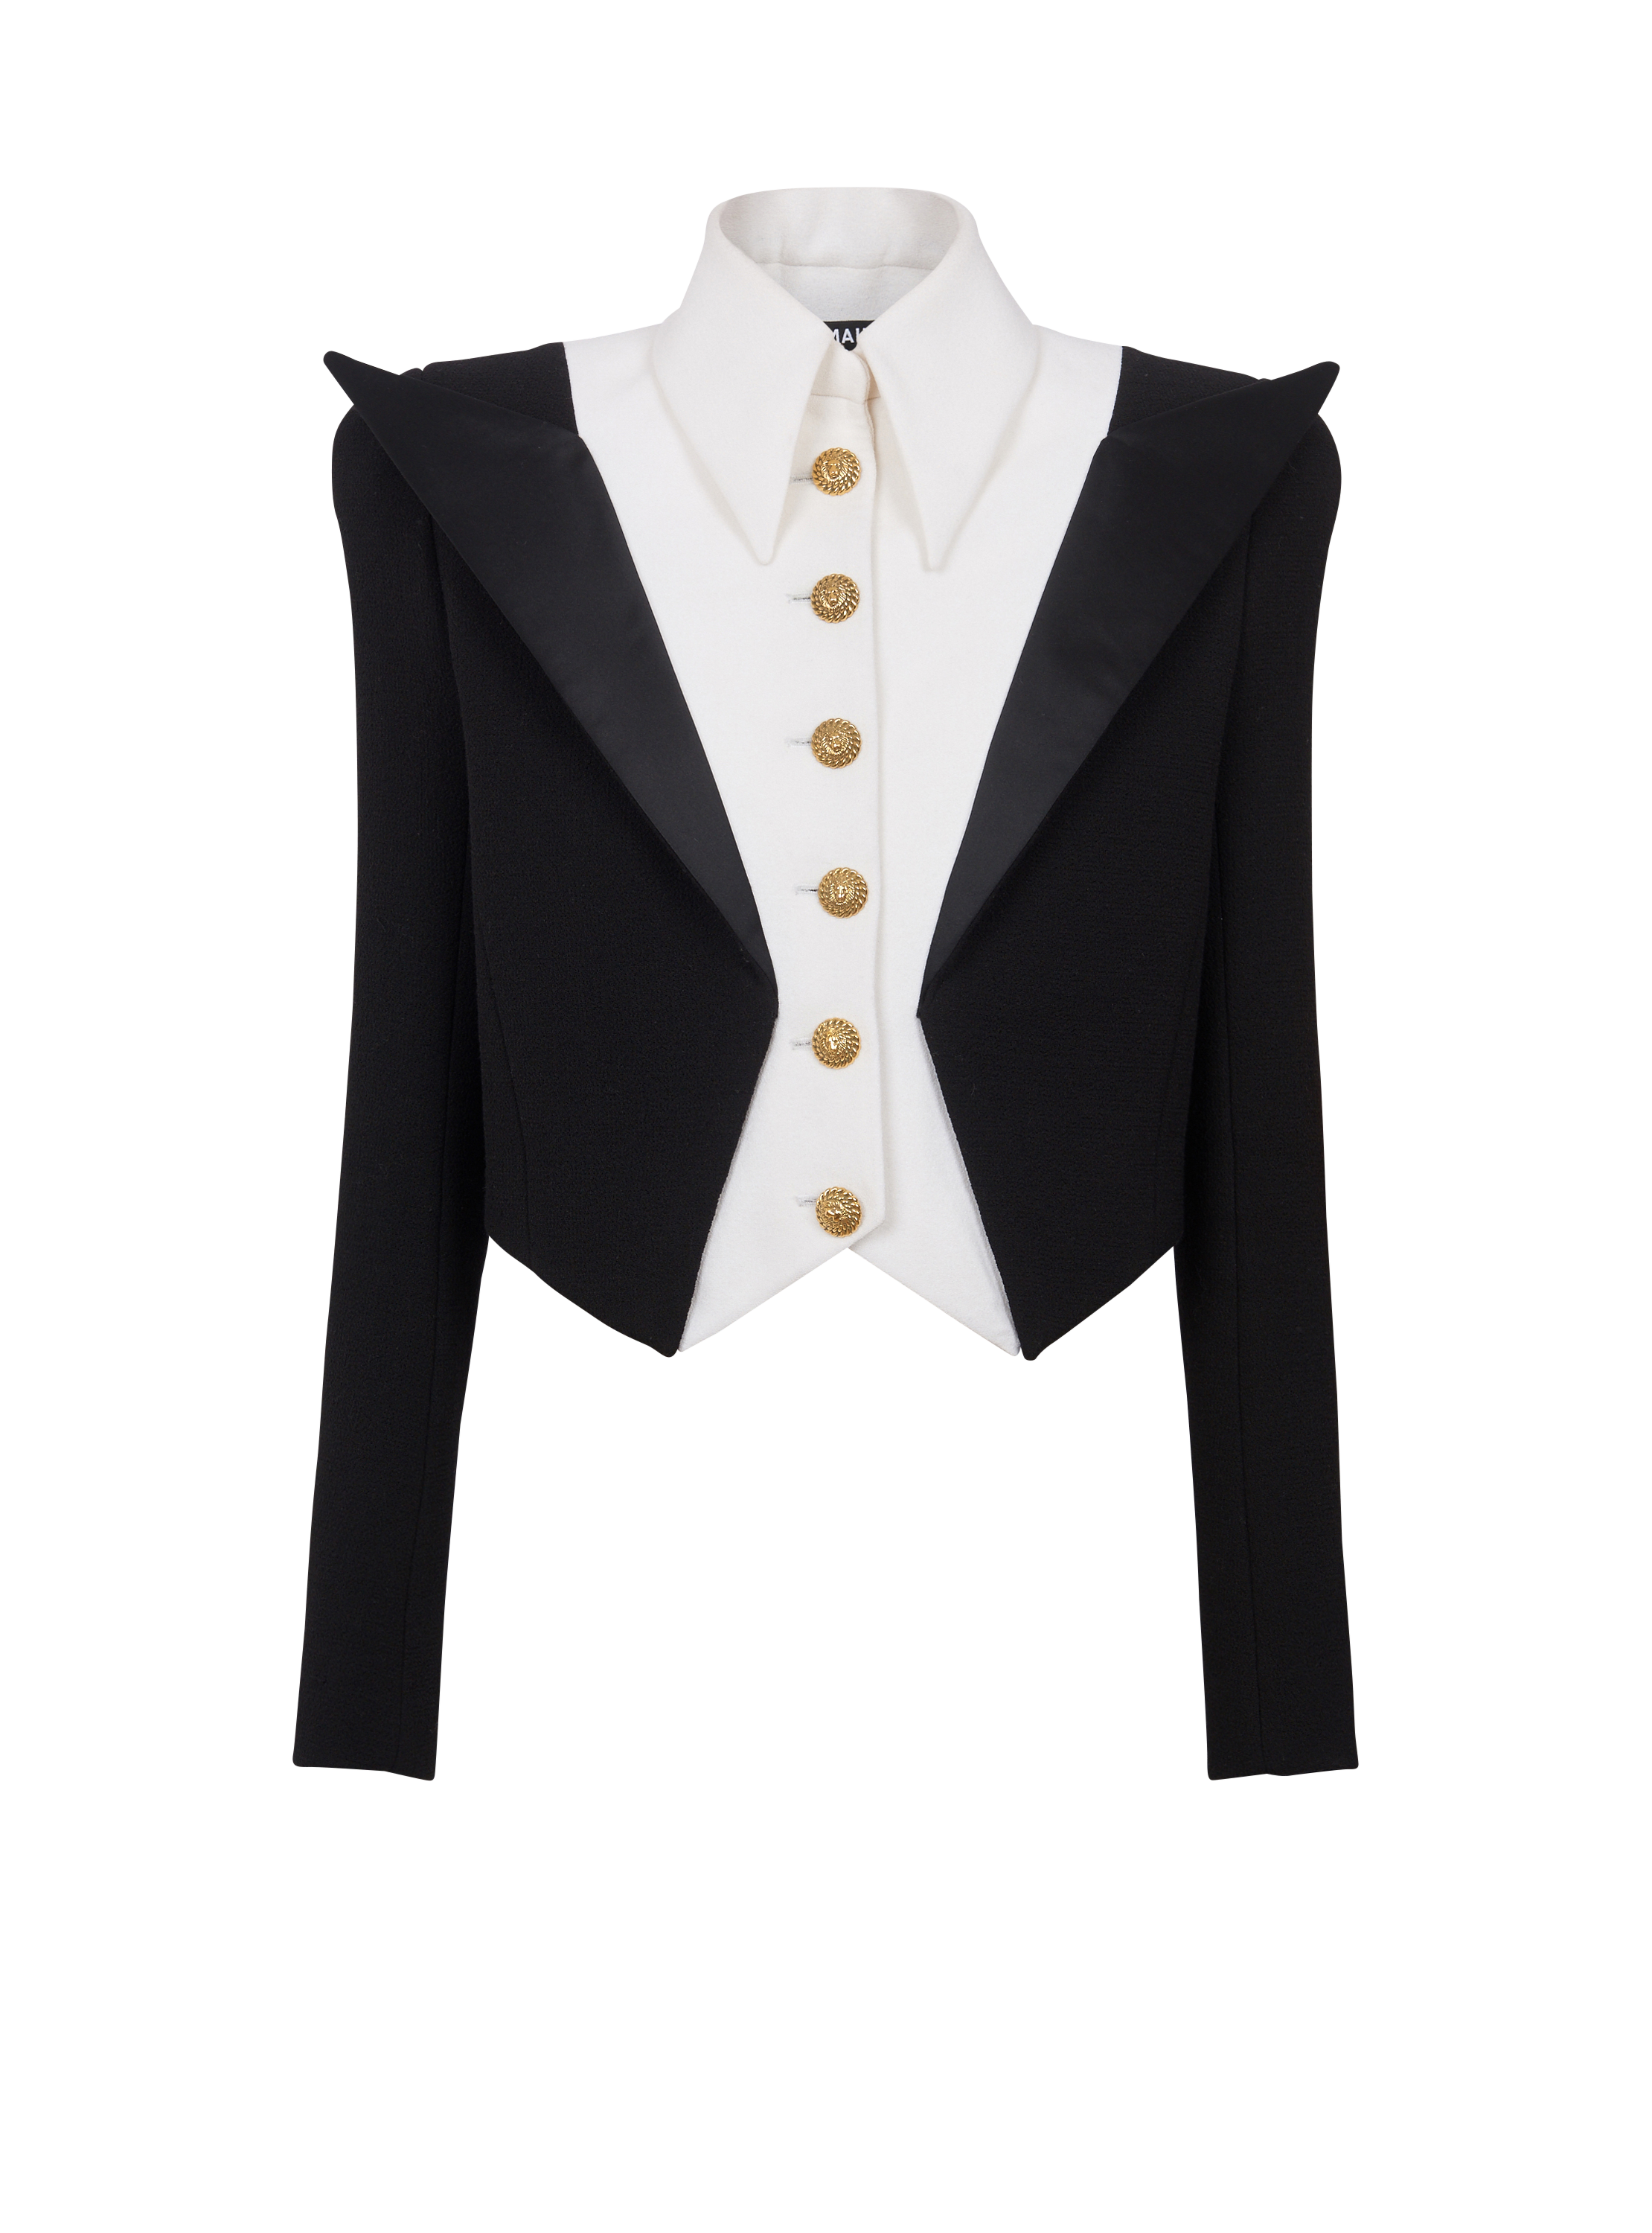 Cropped 6-button crepe jacket, black, hi-res